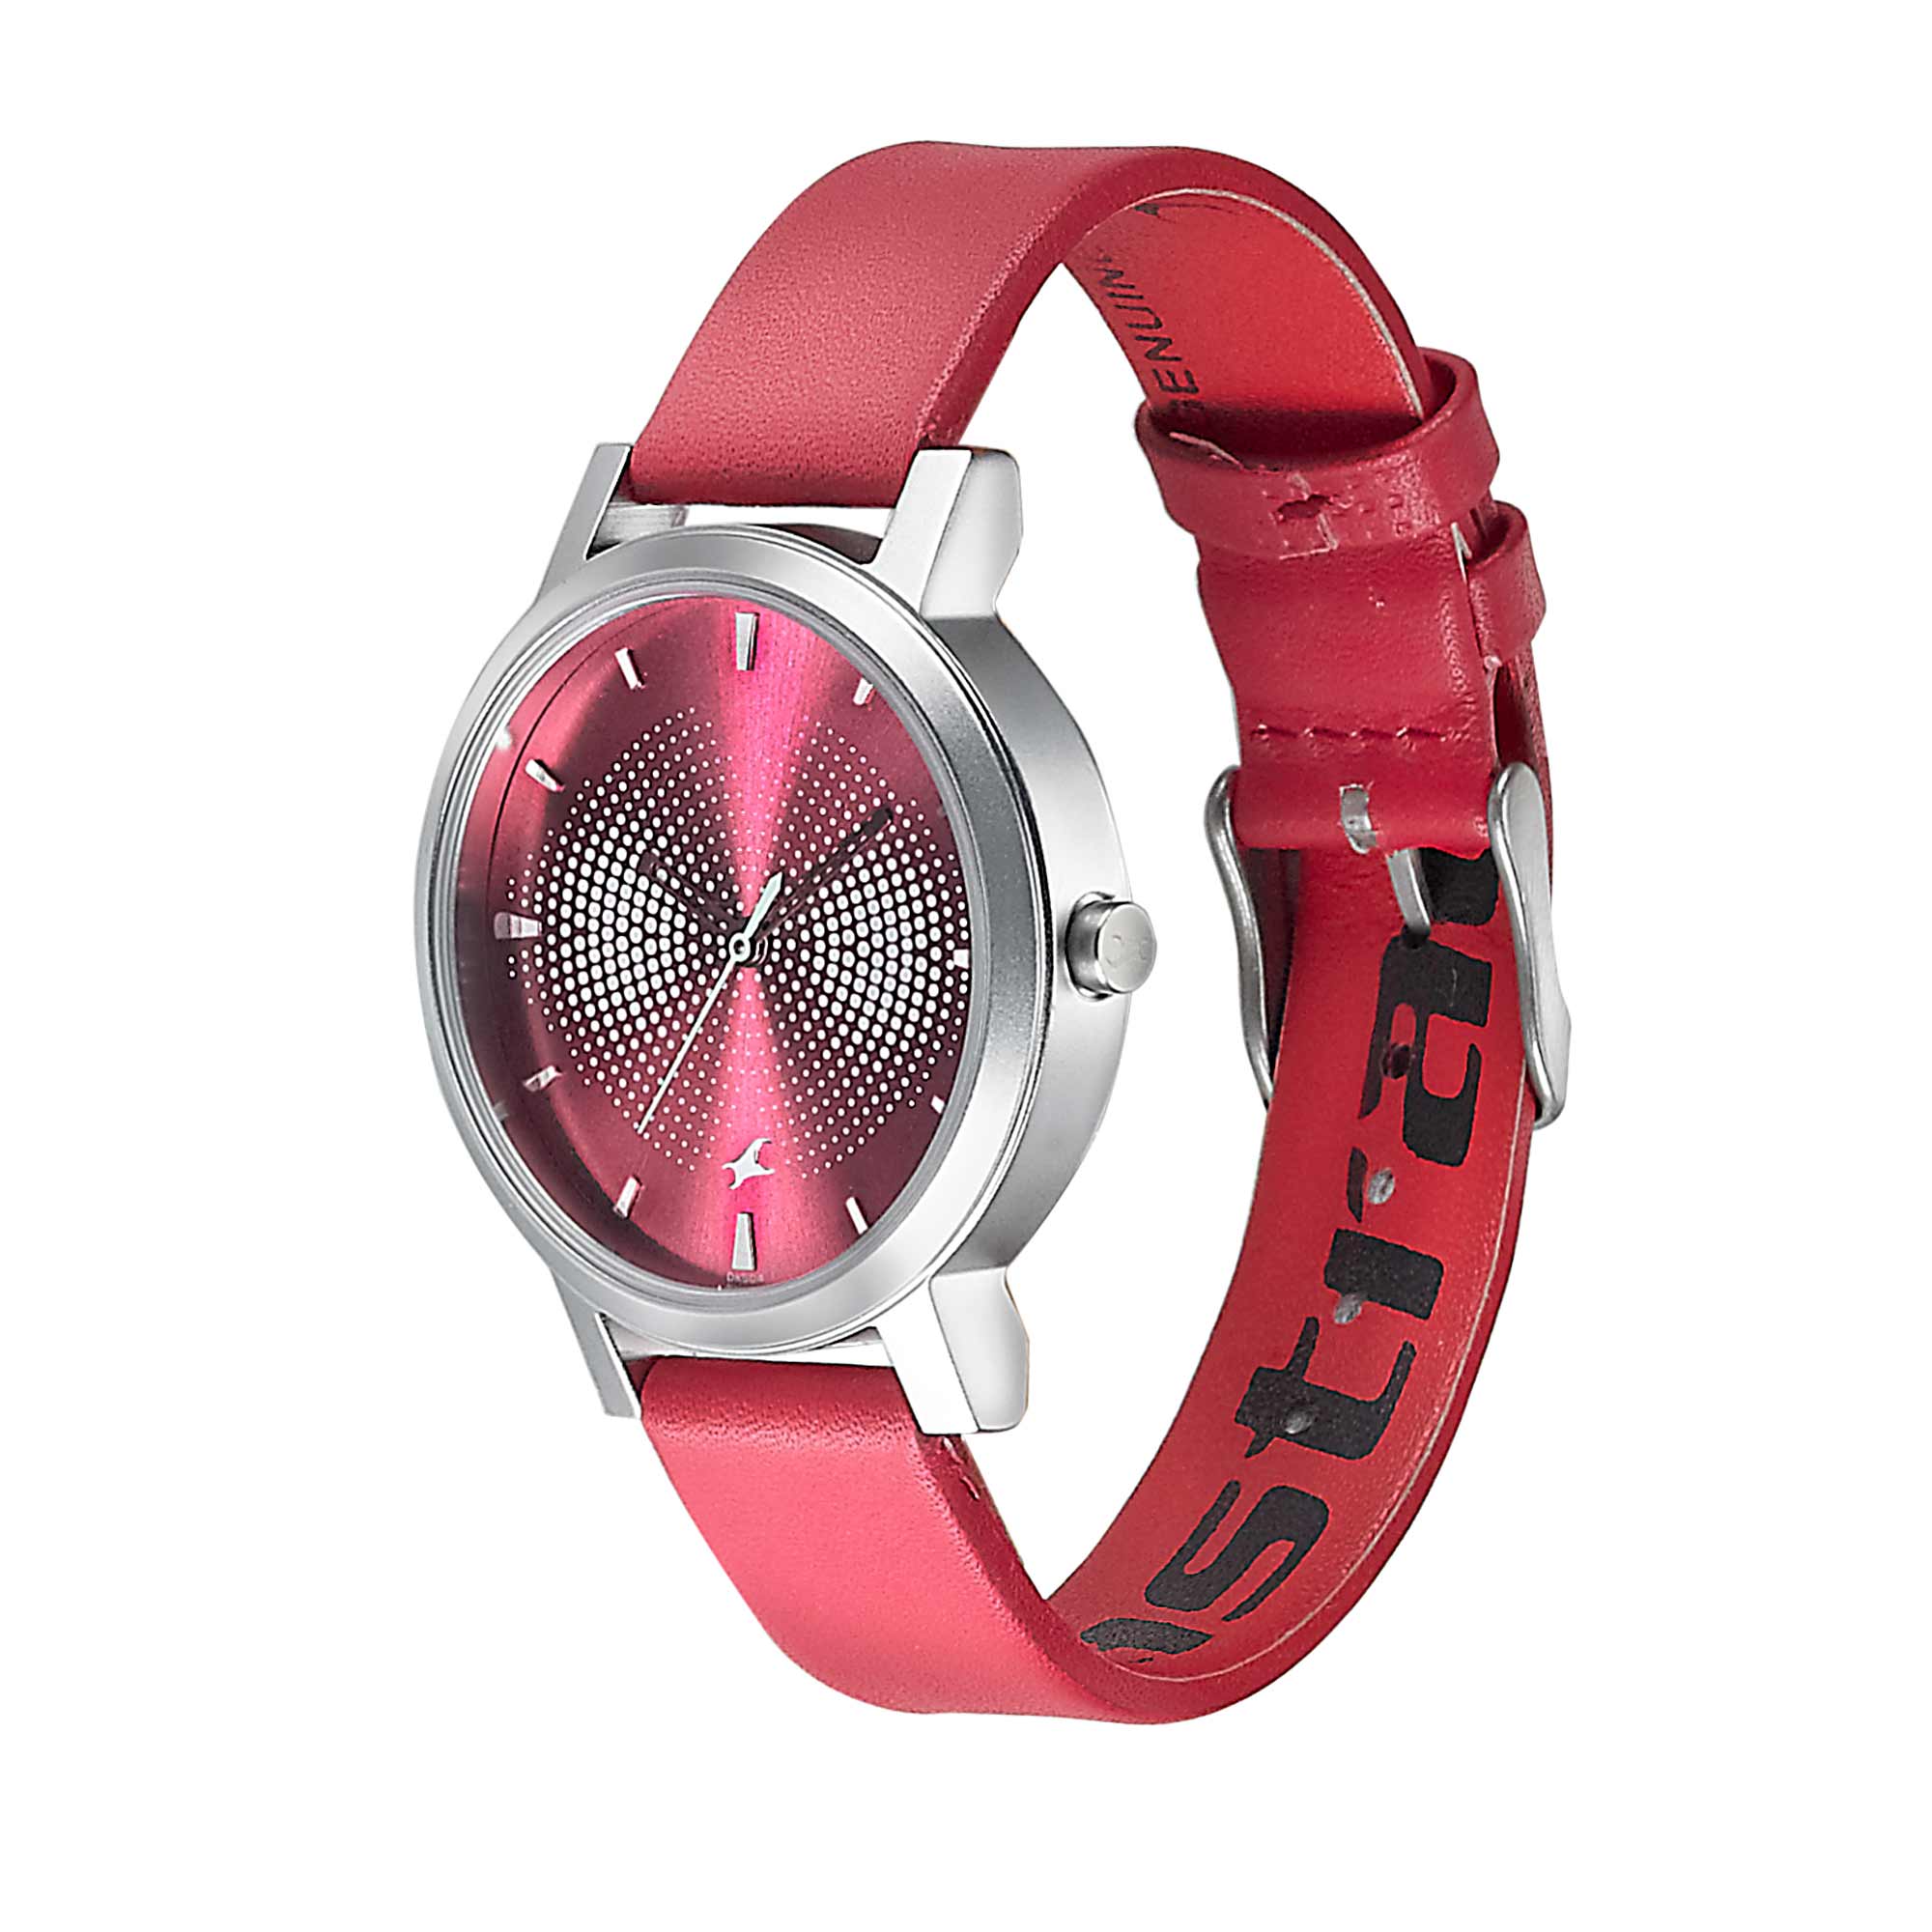 Fastrack Sunburn Quartz Analog Pink Dial Leather Strap Watch for Girls